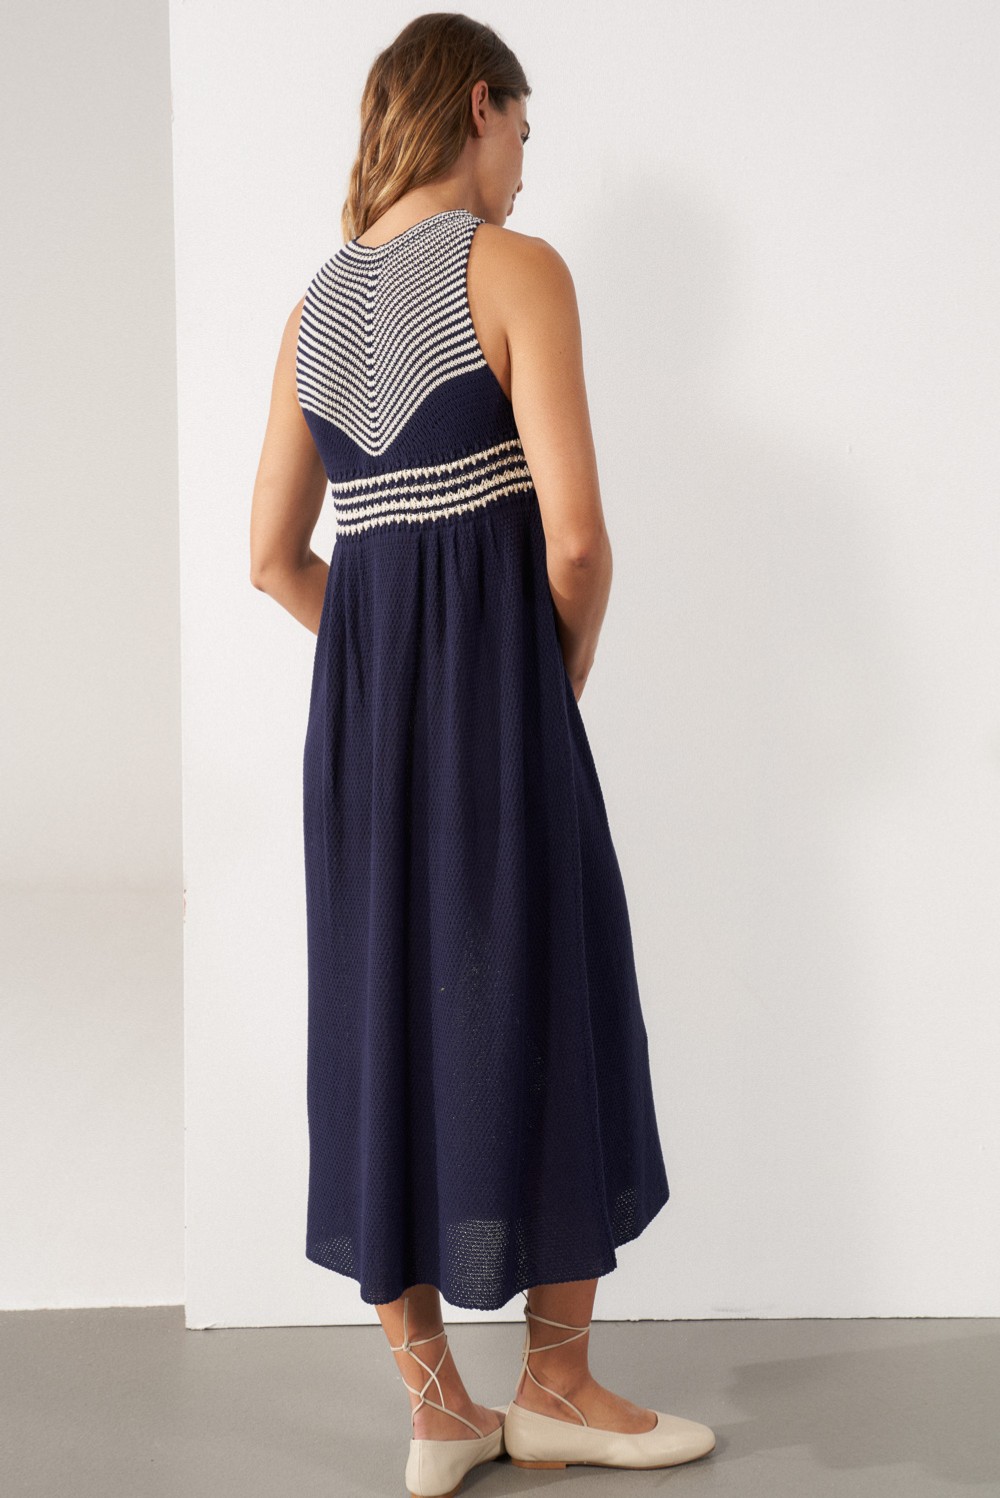 Textured halter dress 2